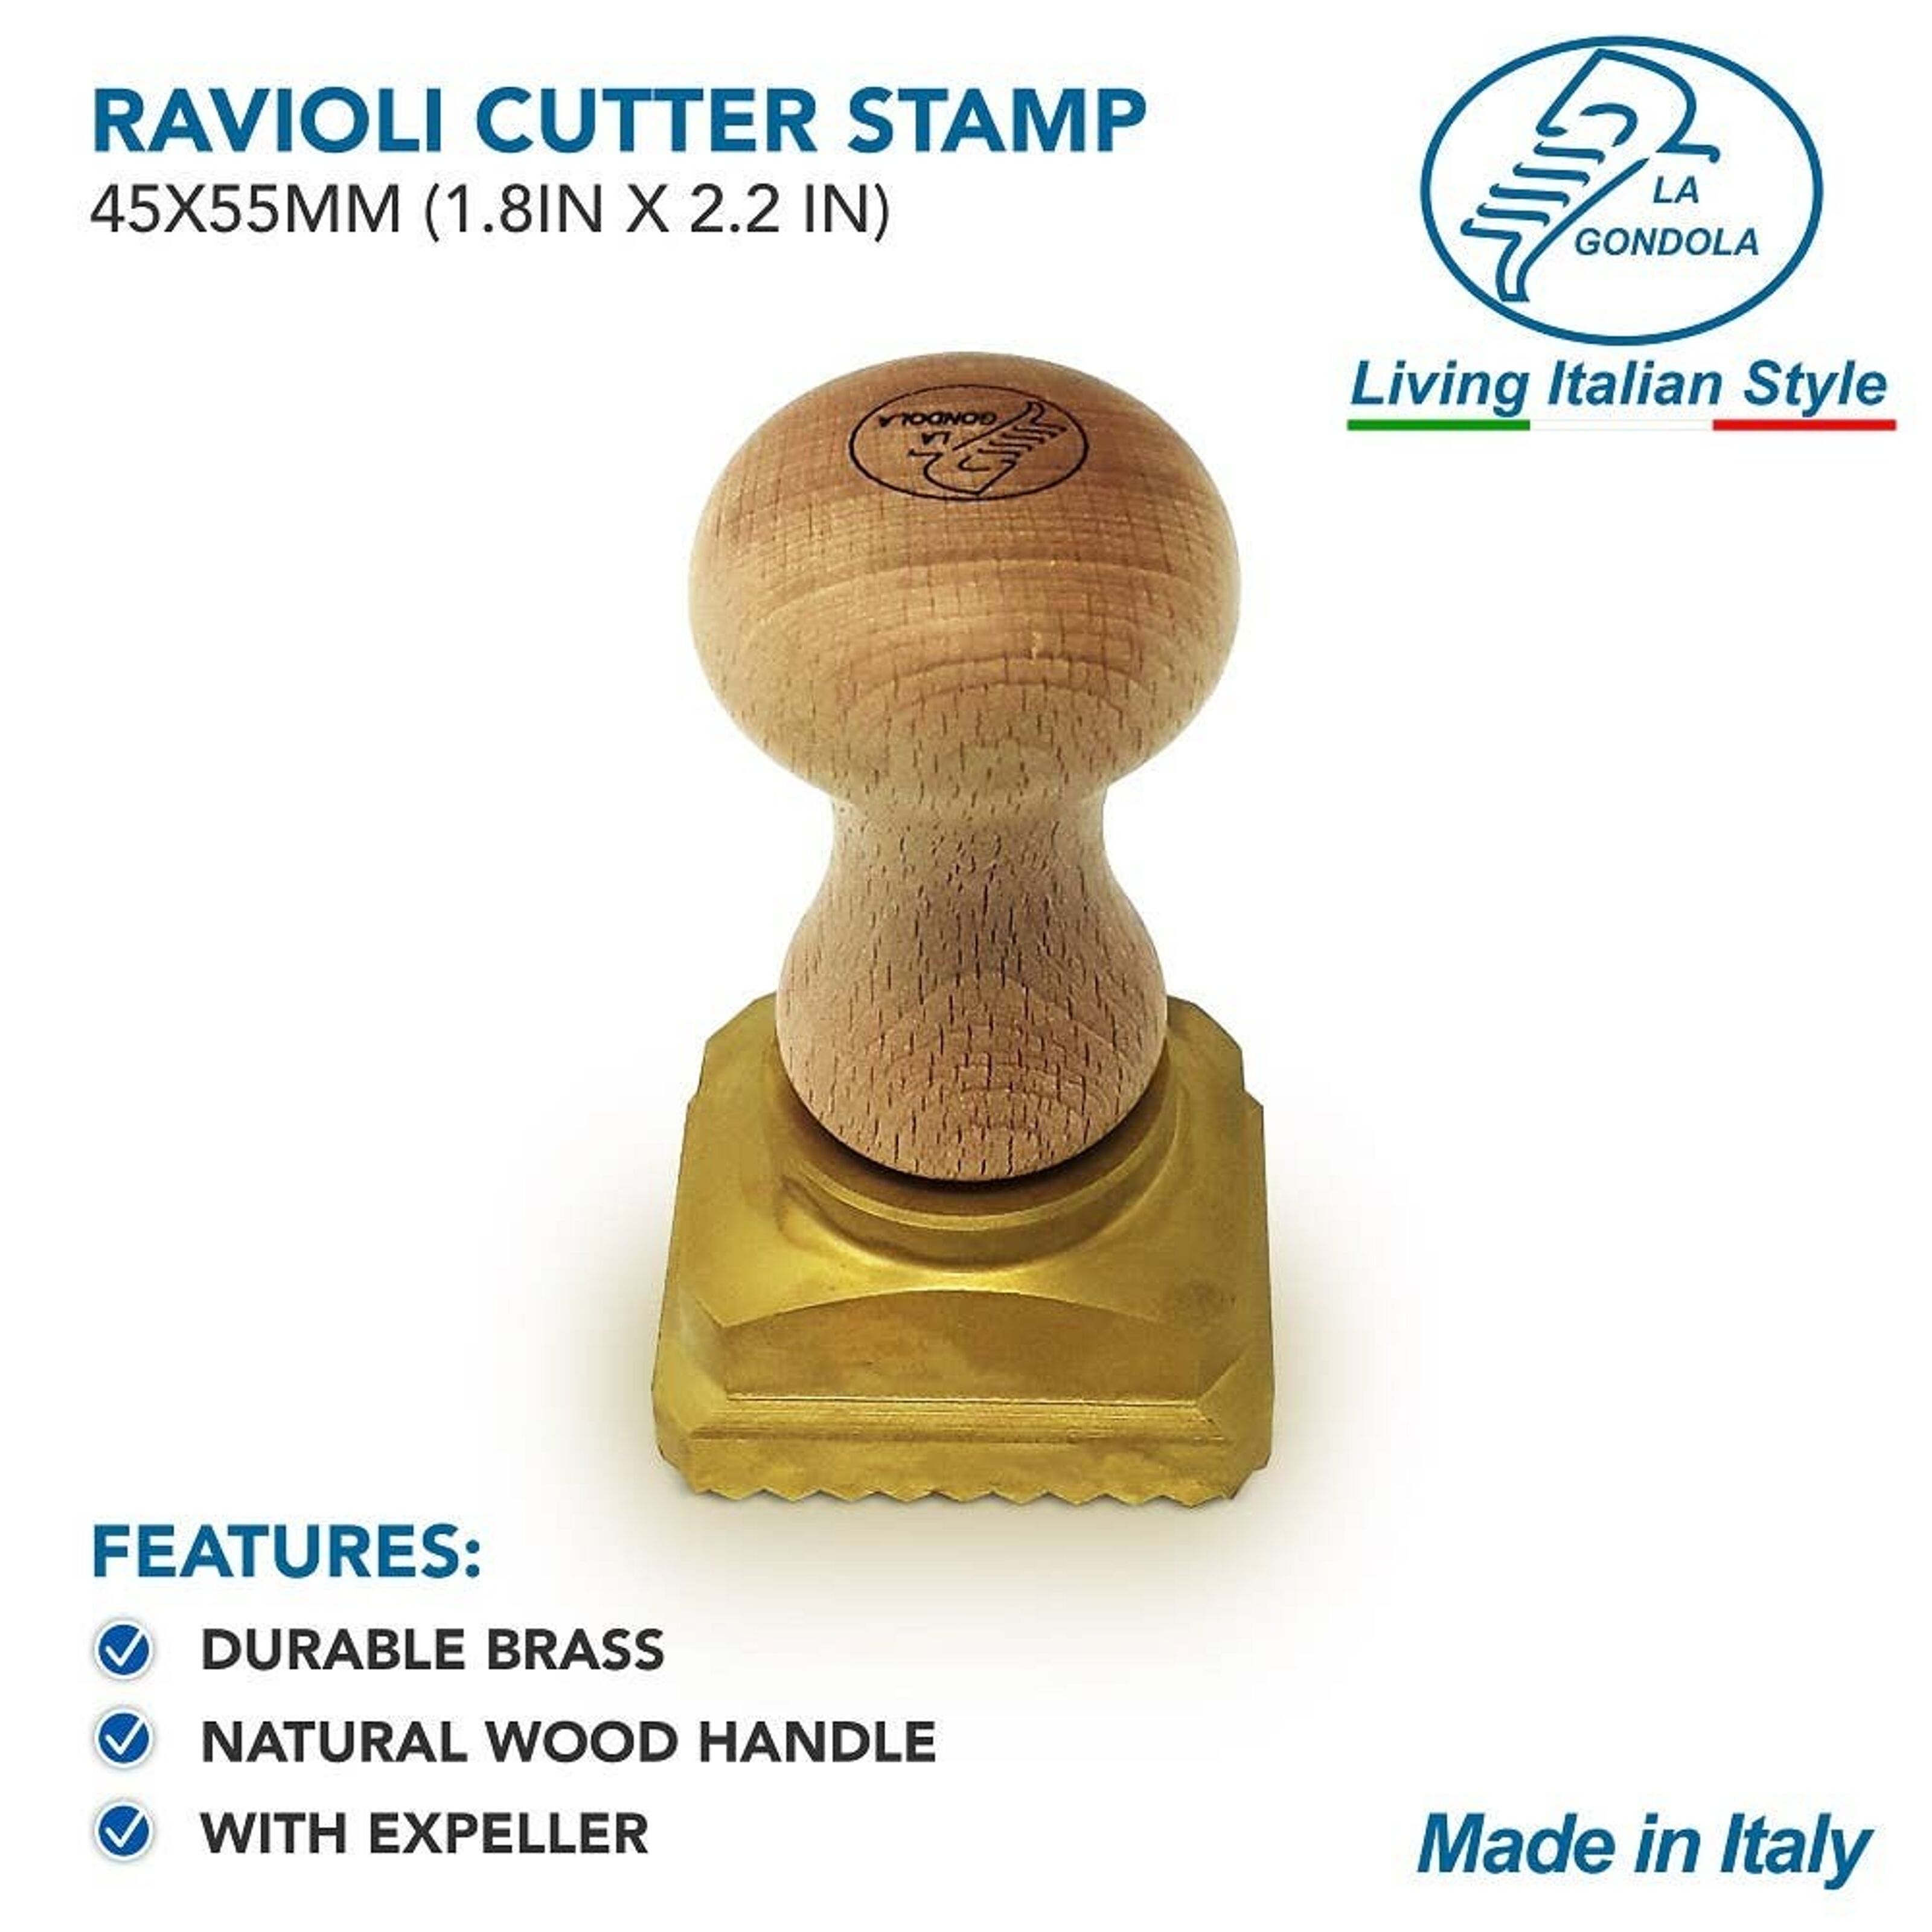 LA GONDOLA Professional Ravioli Stamp and Pasta Cutter Wheel Made